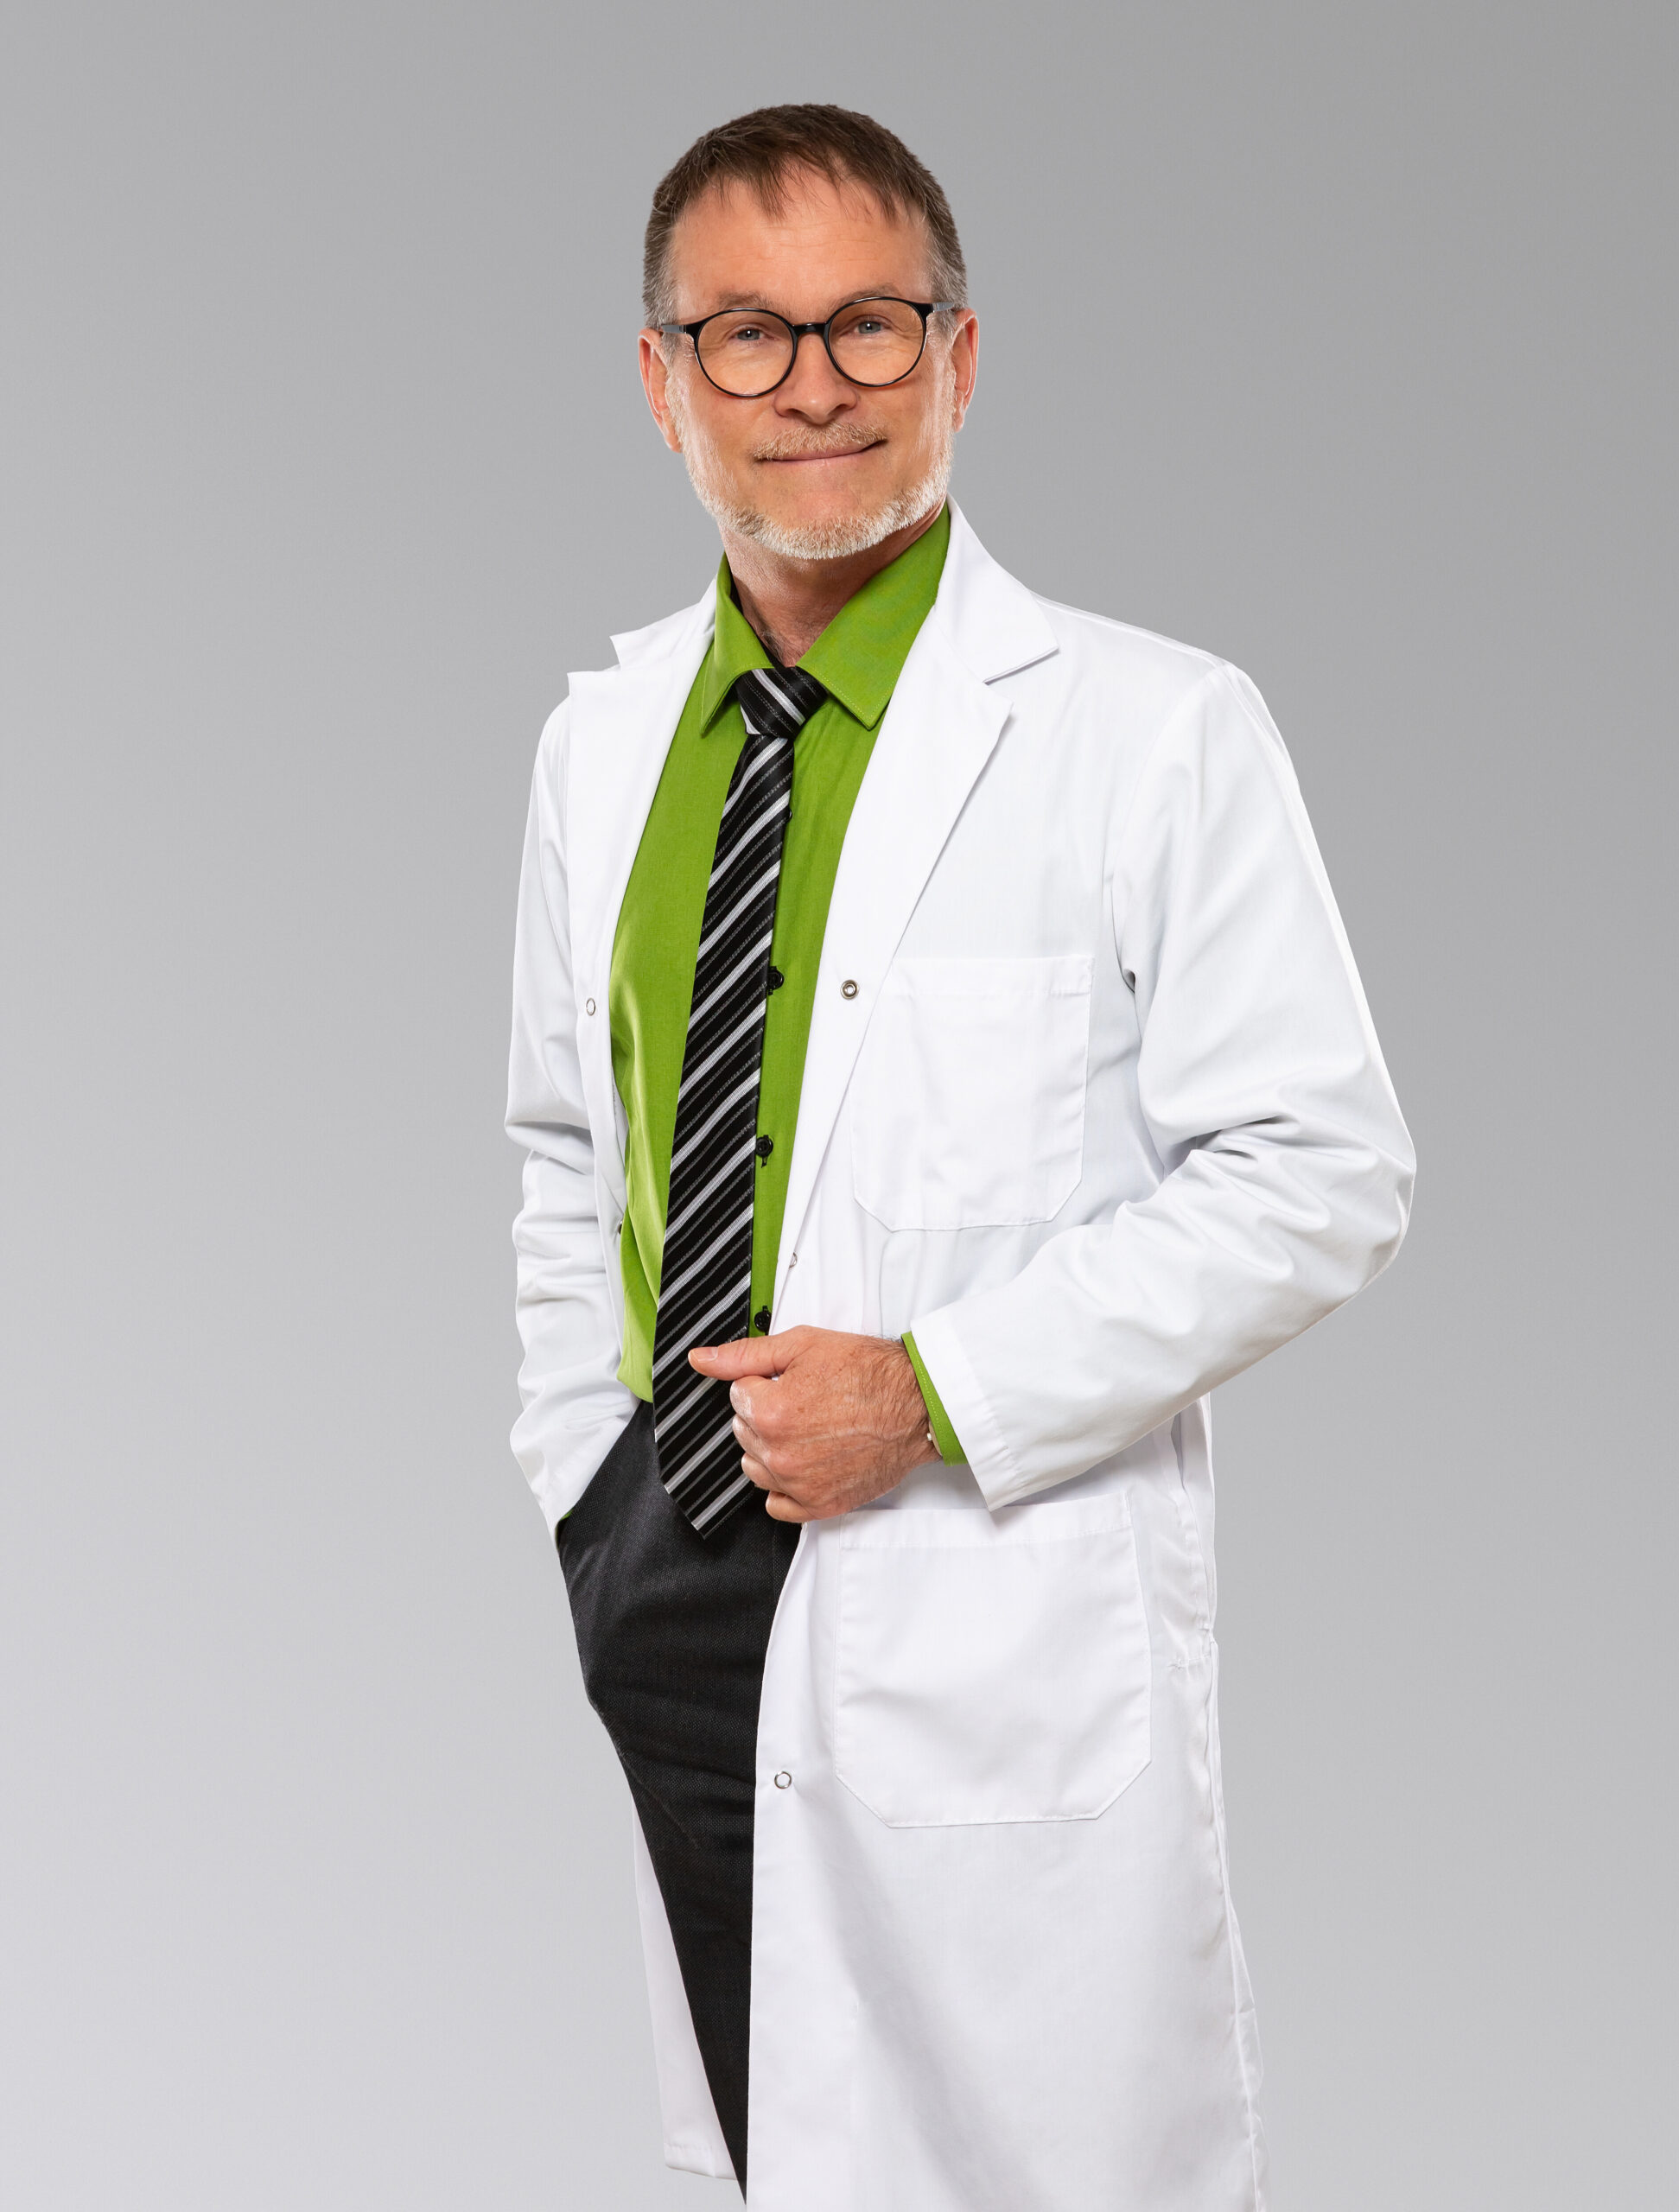 Dr Robert Gendron